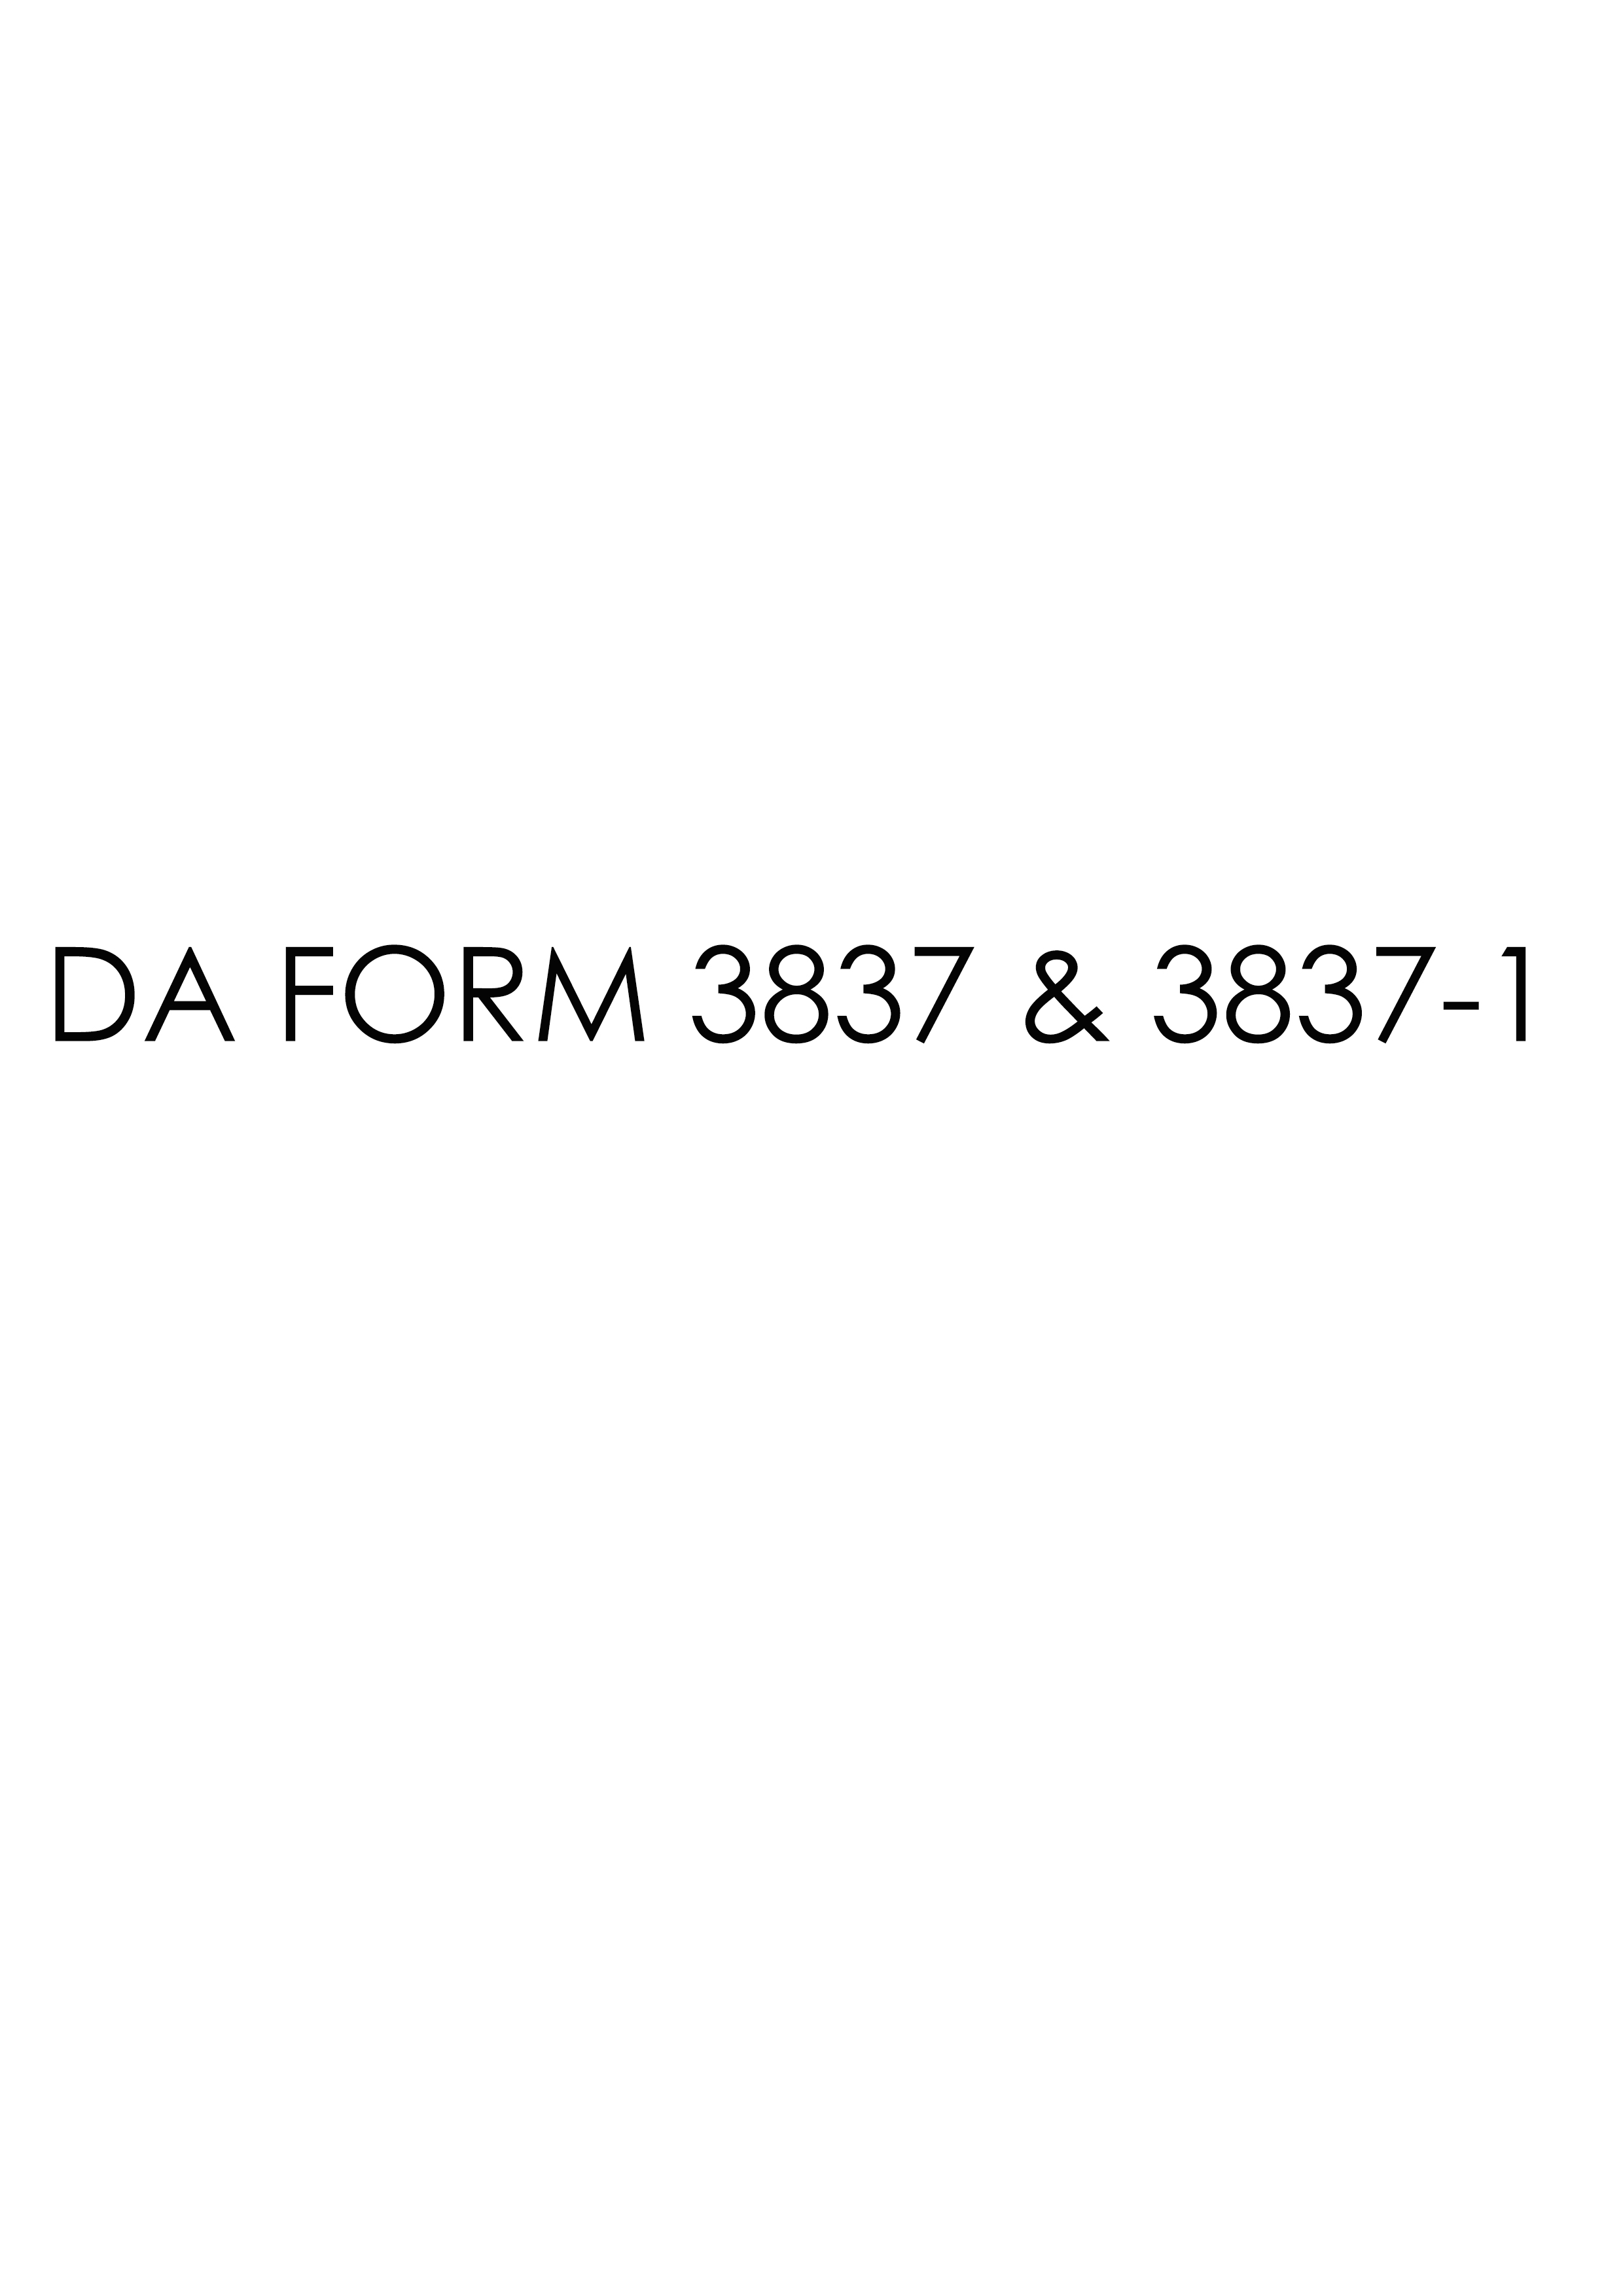 da Form 3837 & 3837-1 fillable